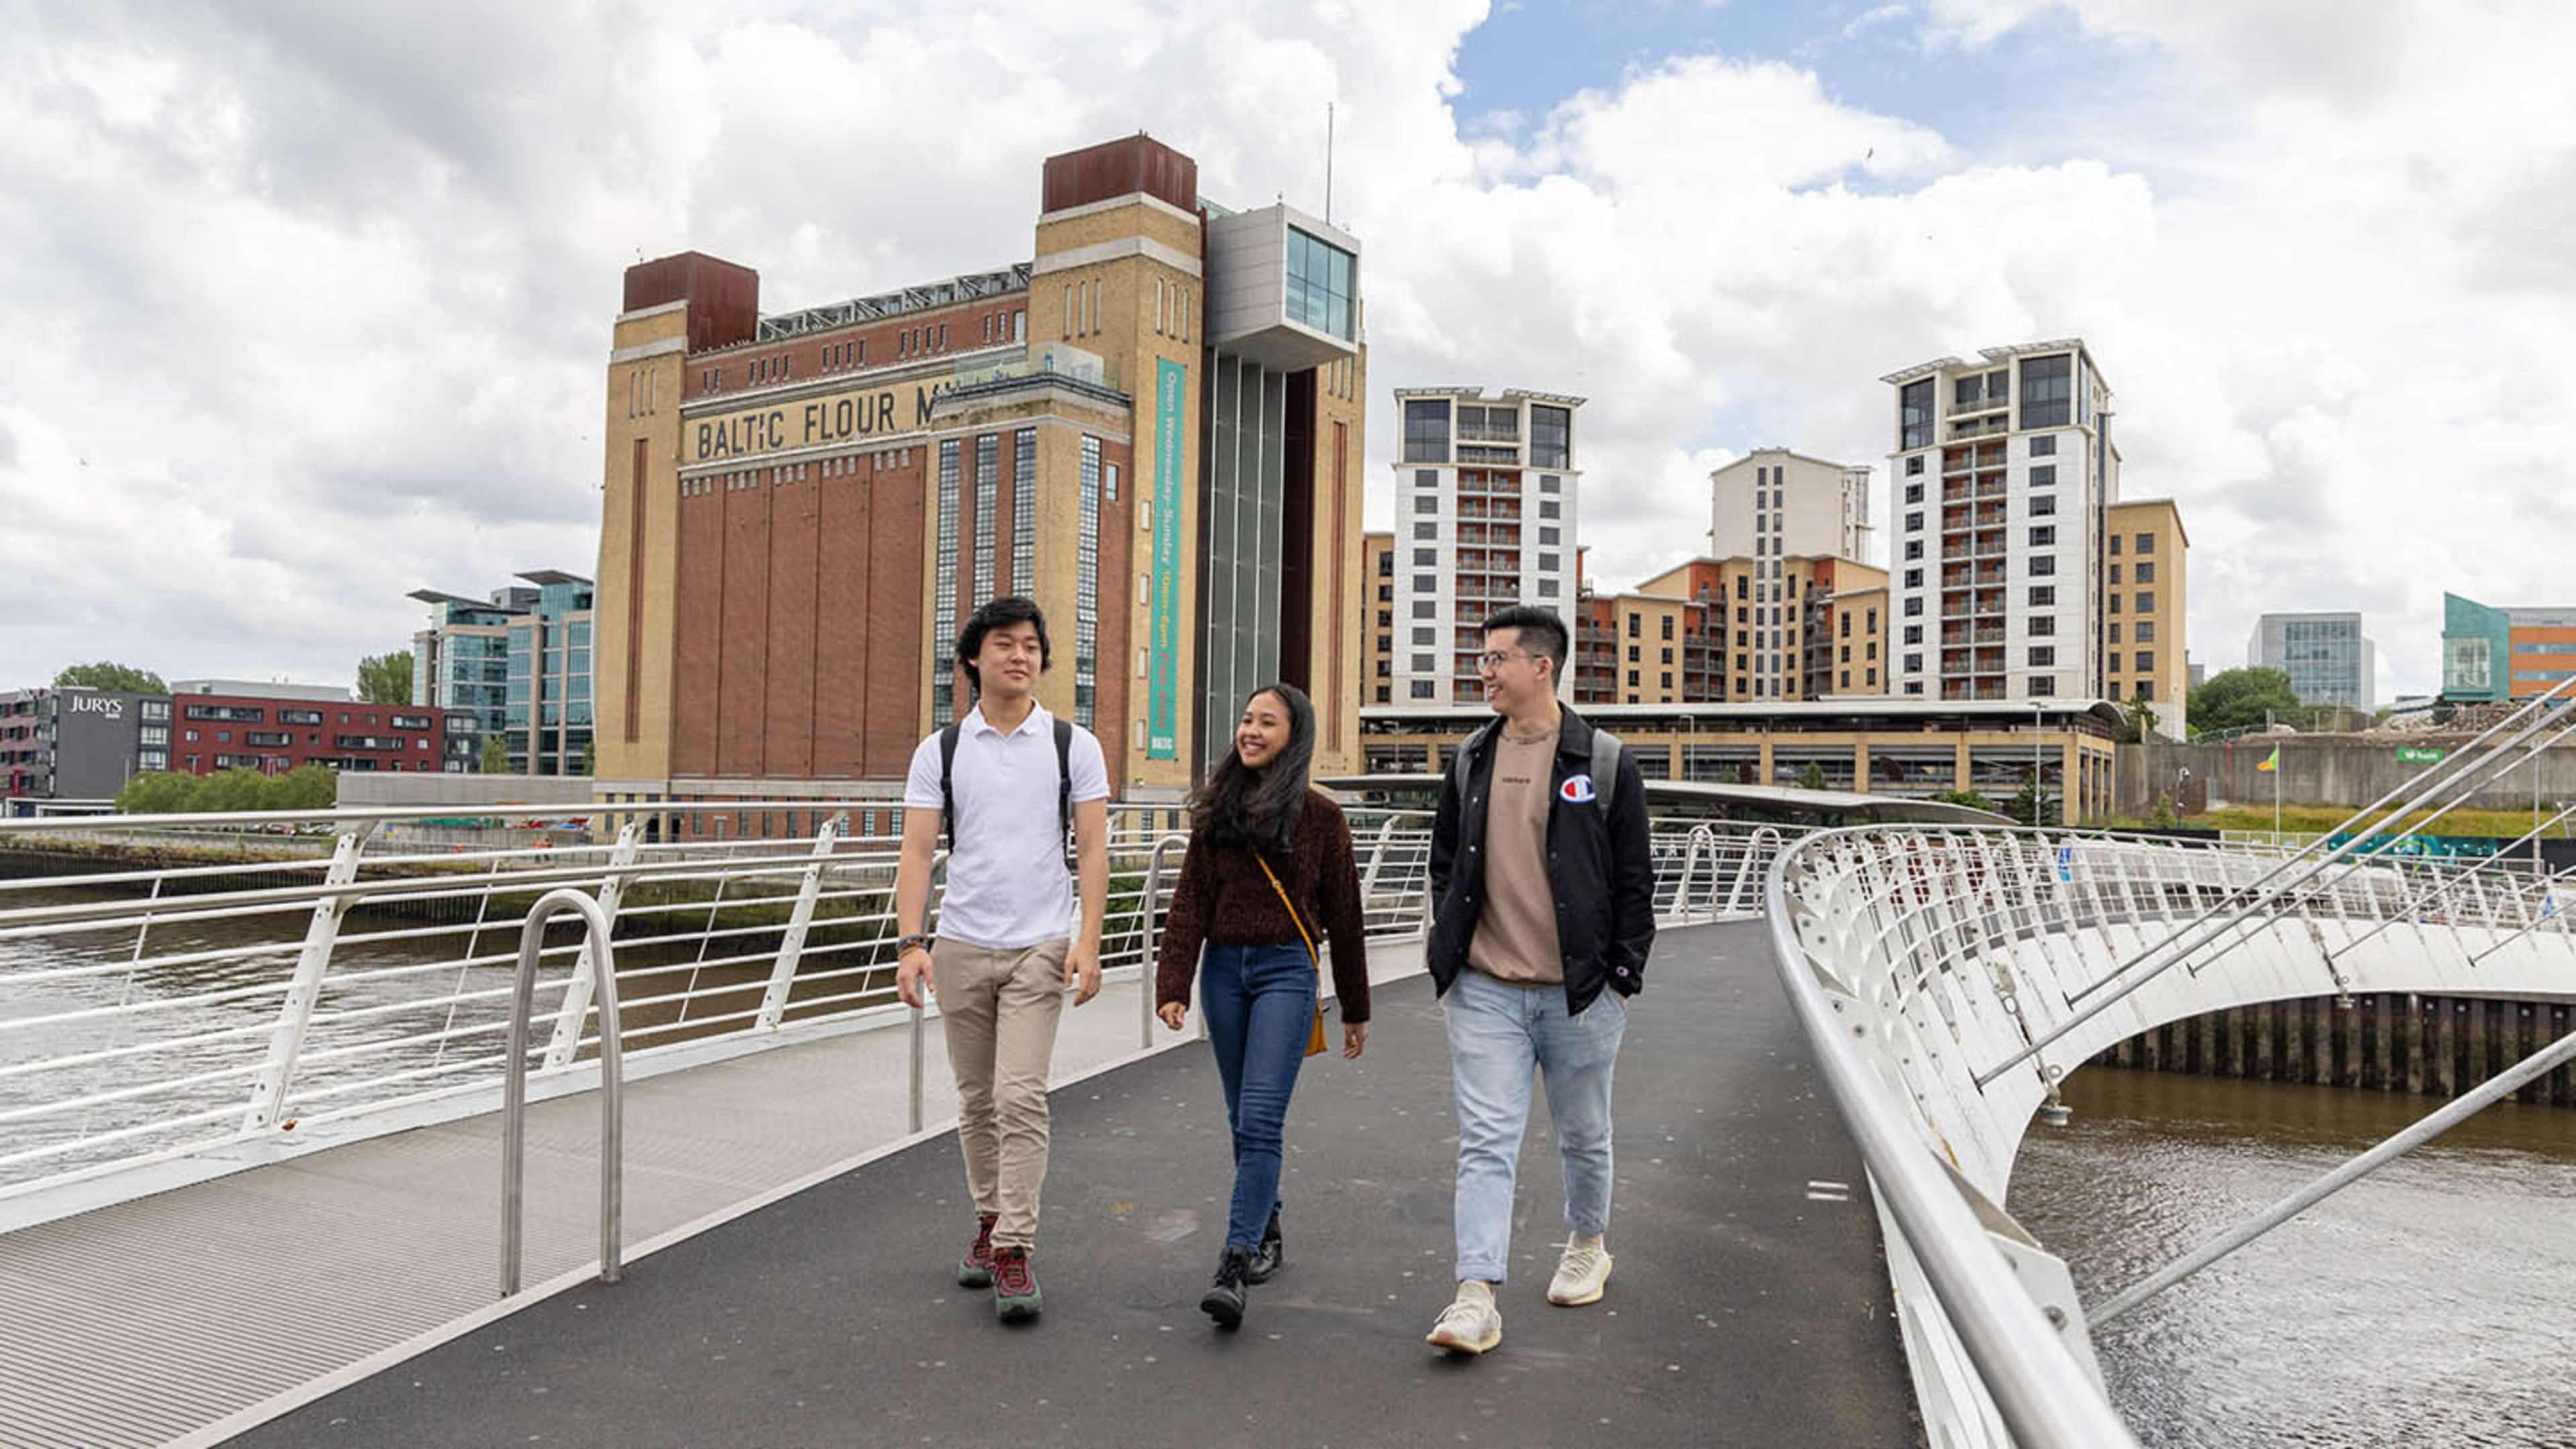 Students walking through Newcastle city